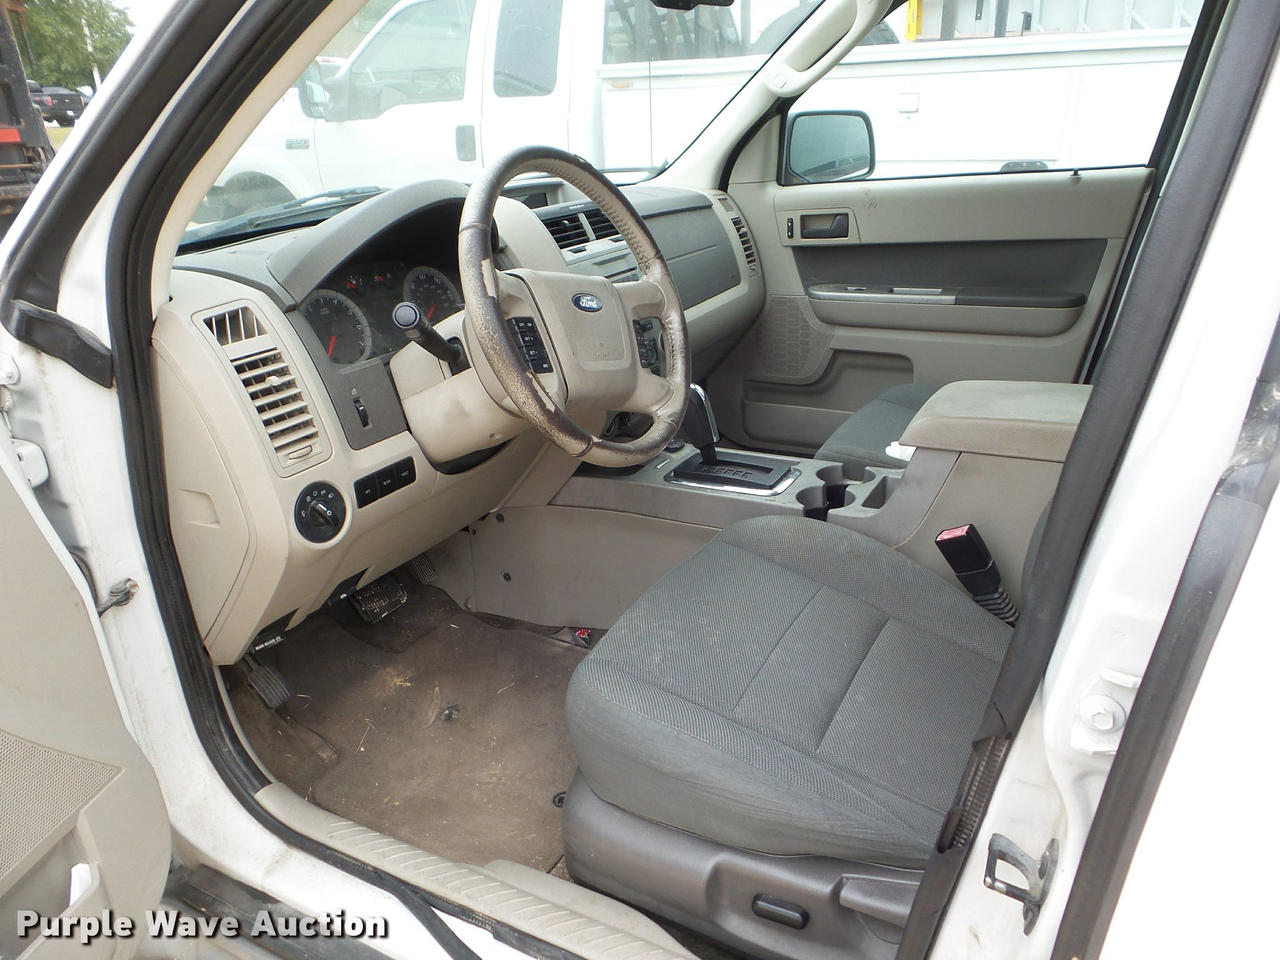 2009 Ford Escape Hybrid Interior by CreativeT01 on DeviantArt